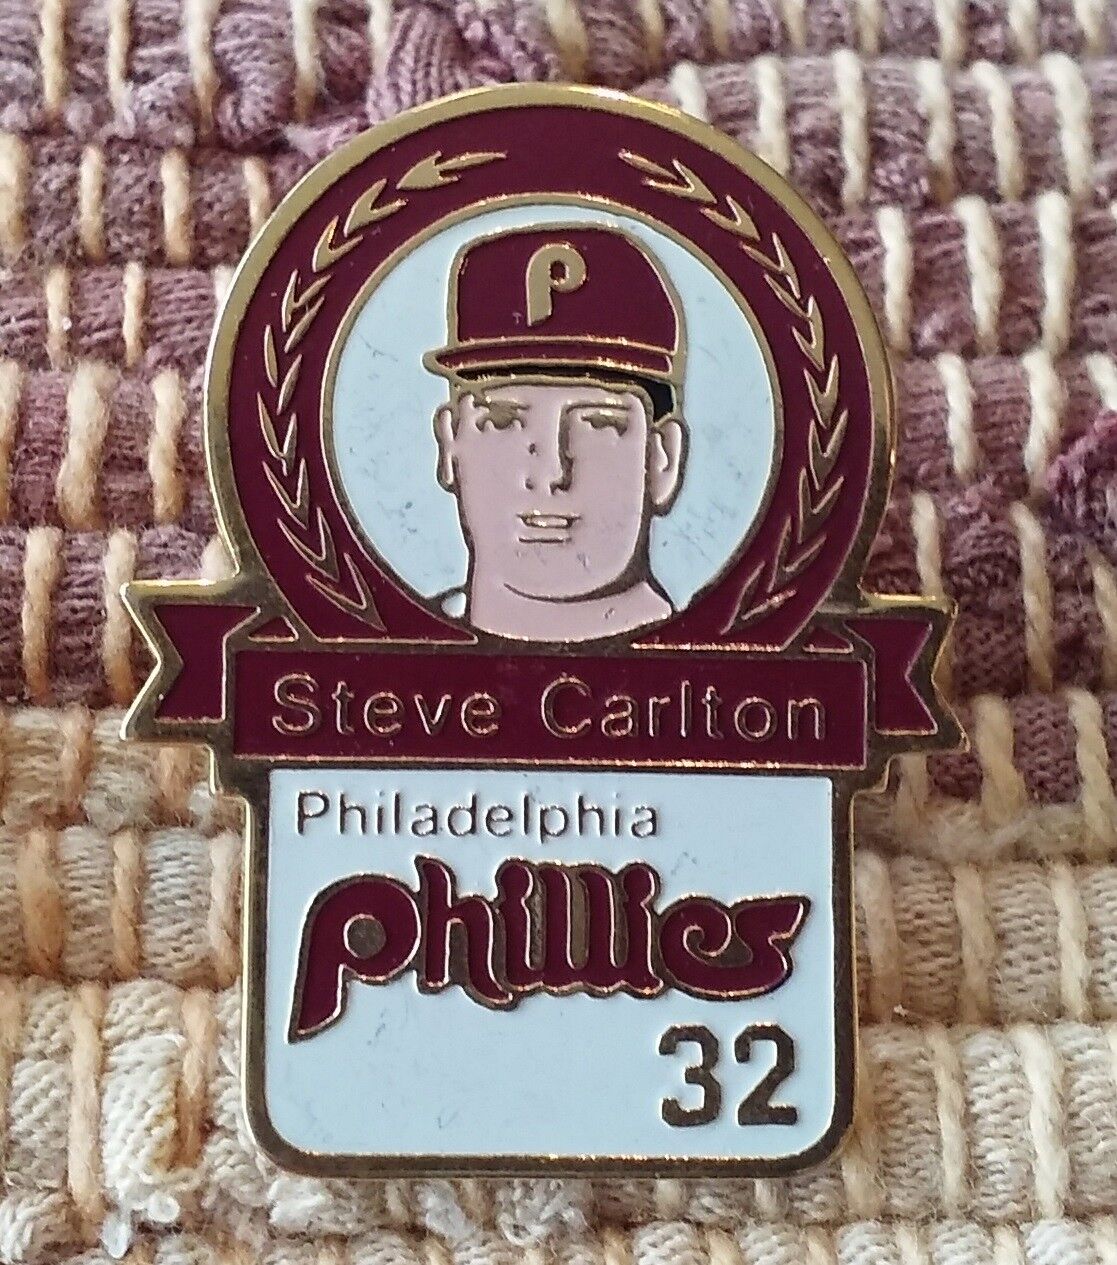 Steve Carlton 32 Philadelphia Phillies pin badge